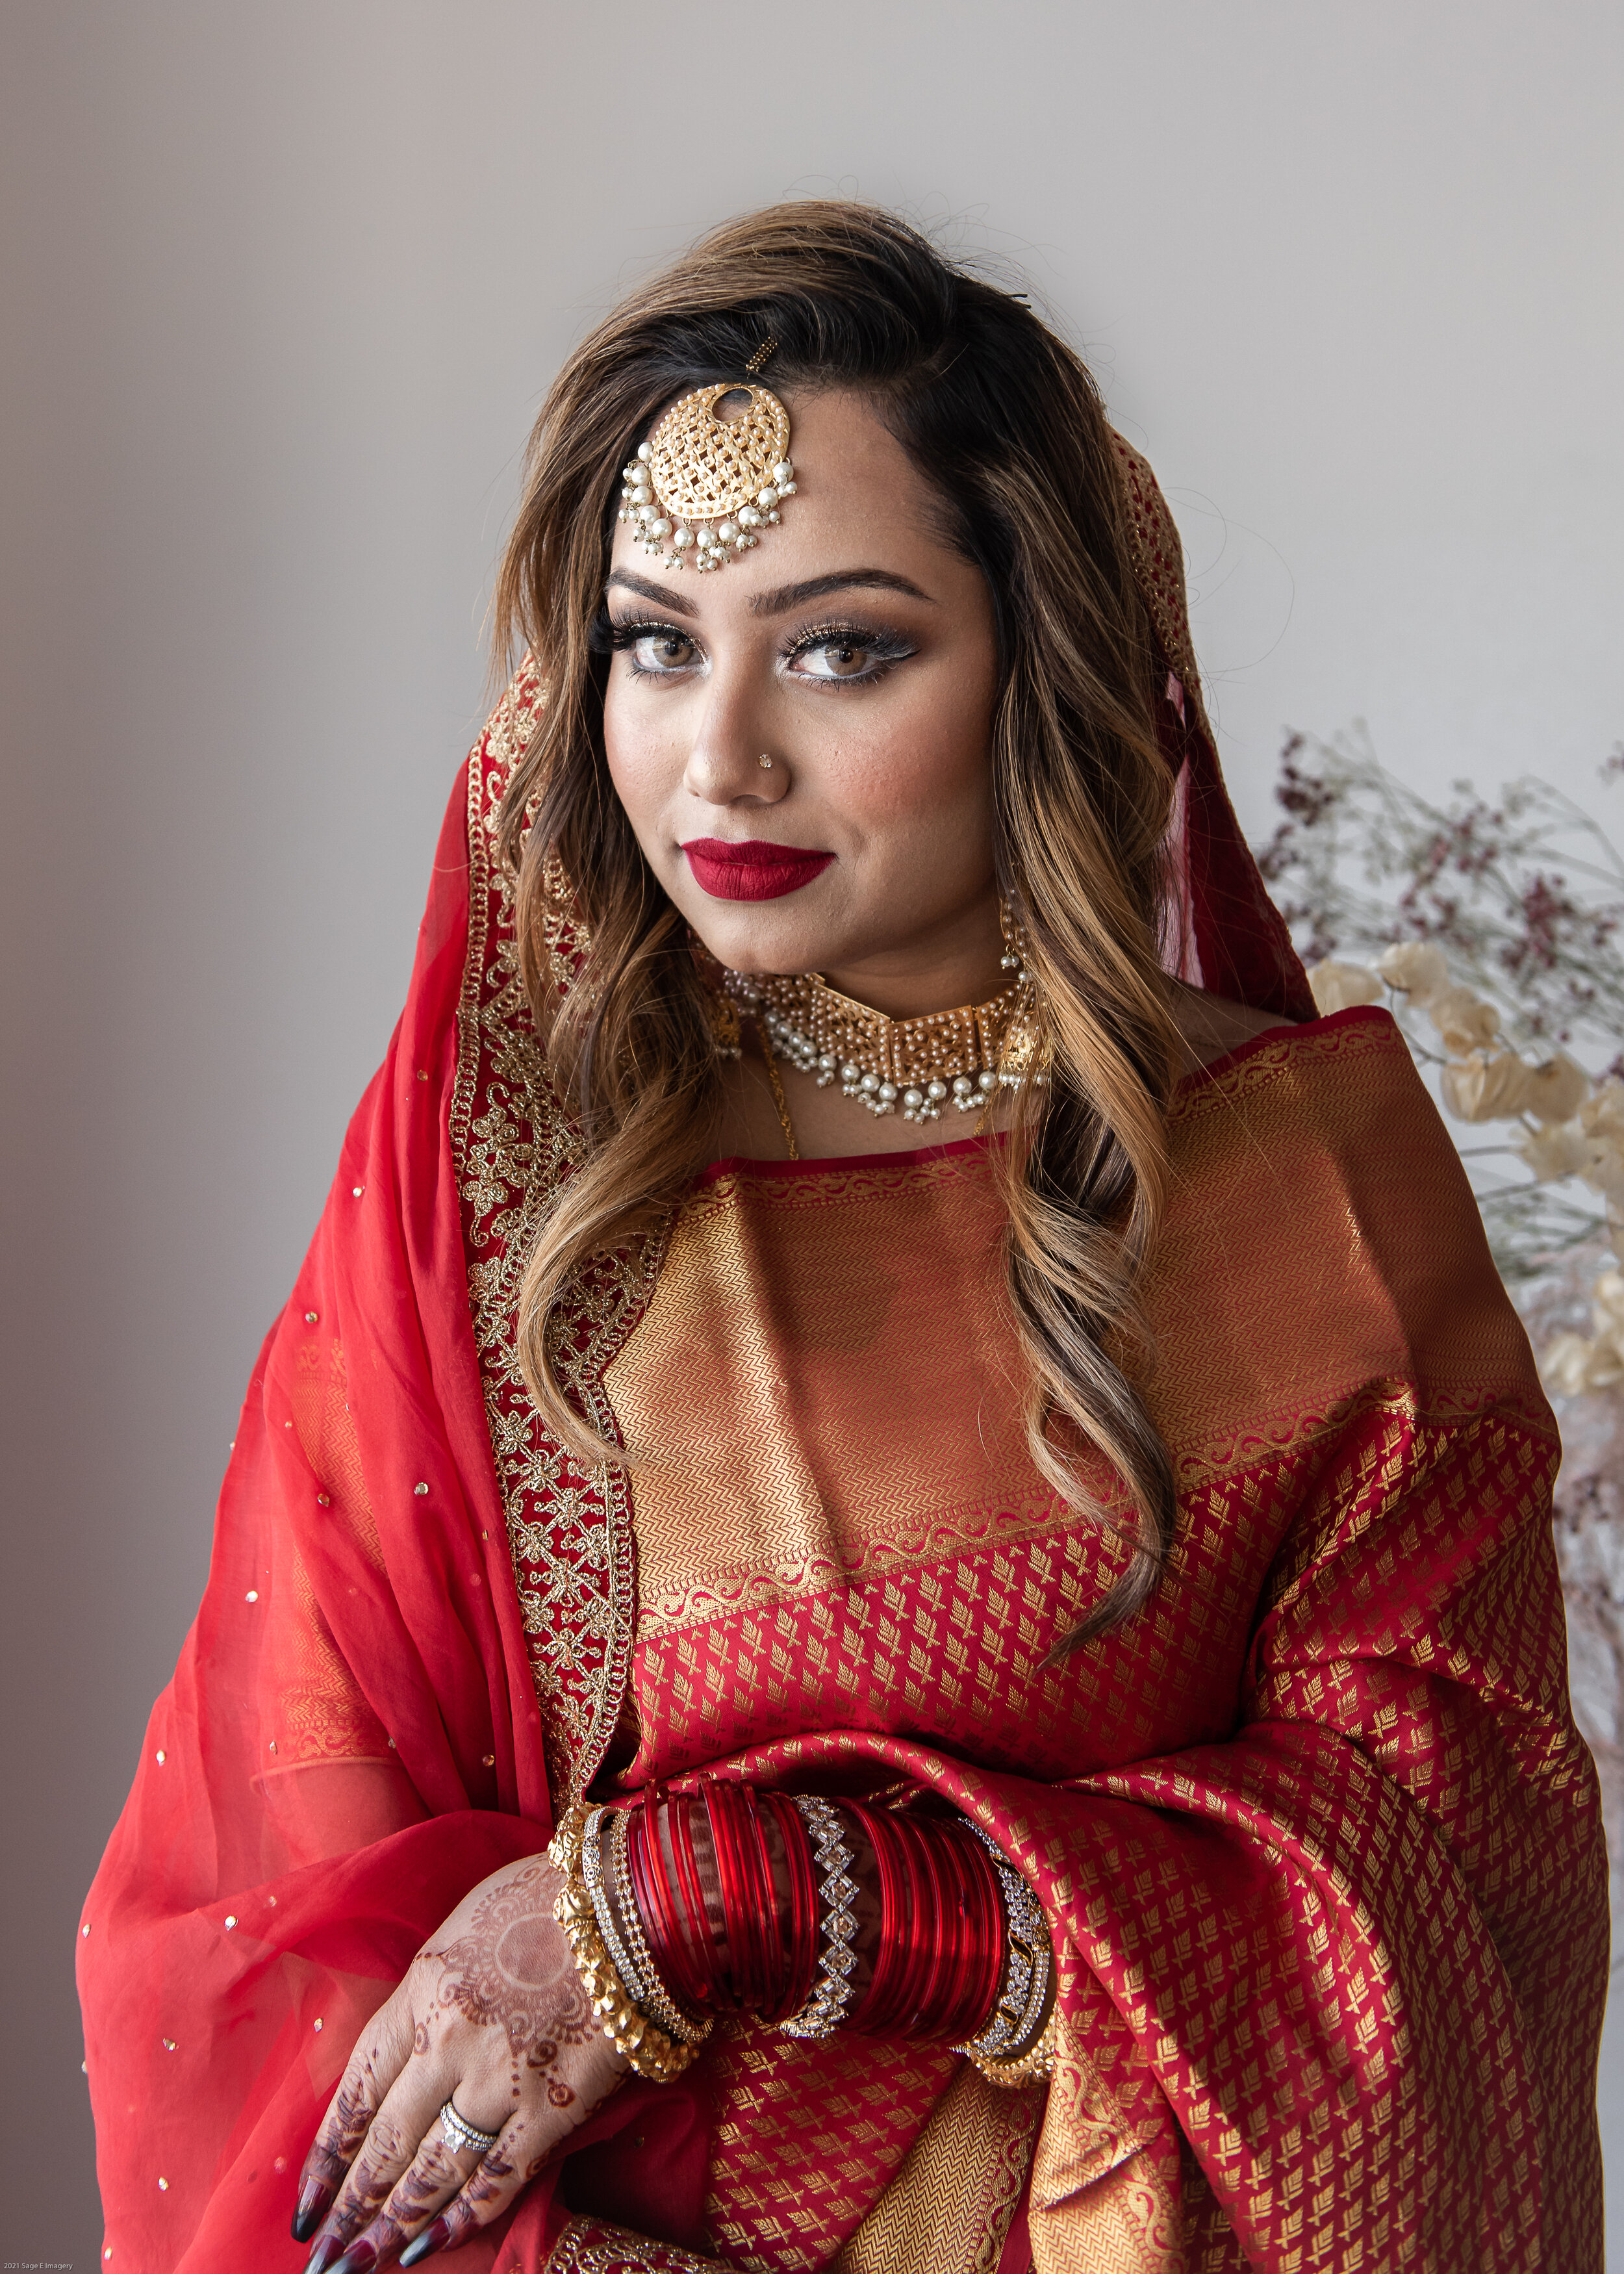 Nibrasul&Yashna LV Studios Apricot Floral Indian Wedding-17.jpg